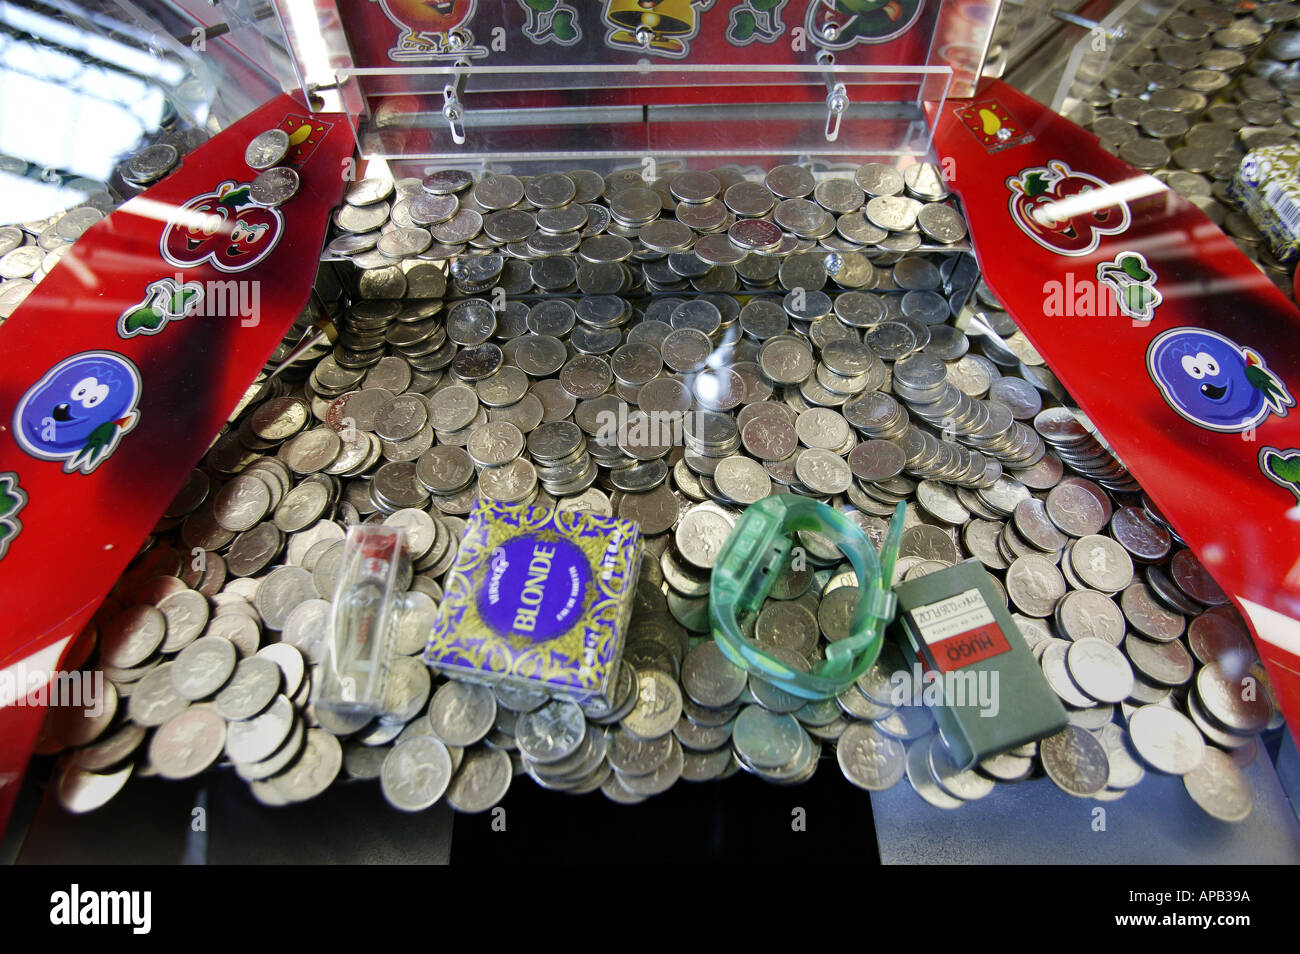 Coin Game Coin Game in a gambling arcade Stock Photo ...